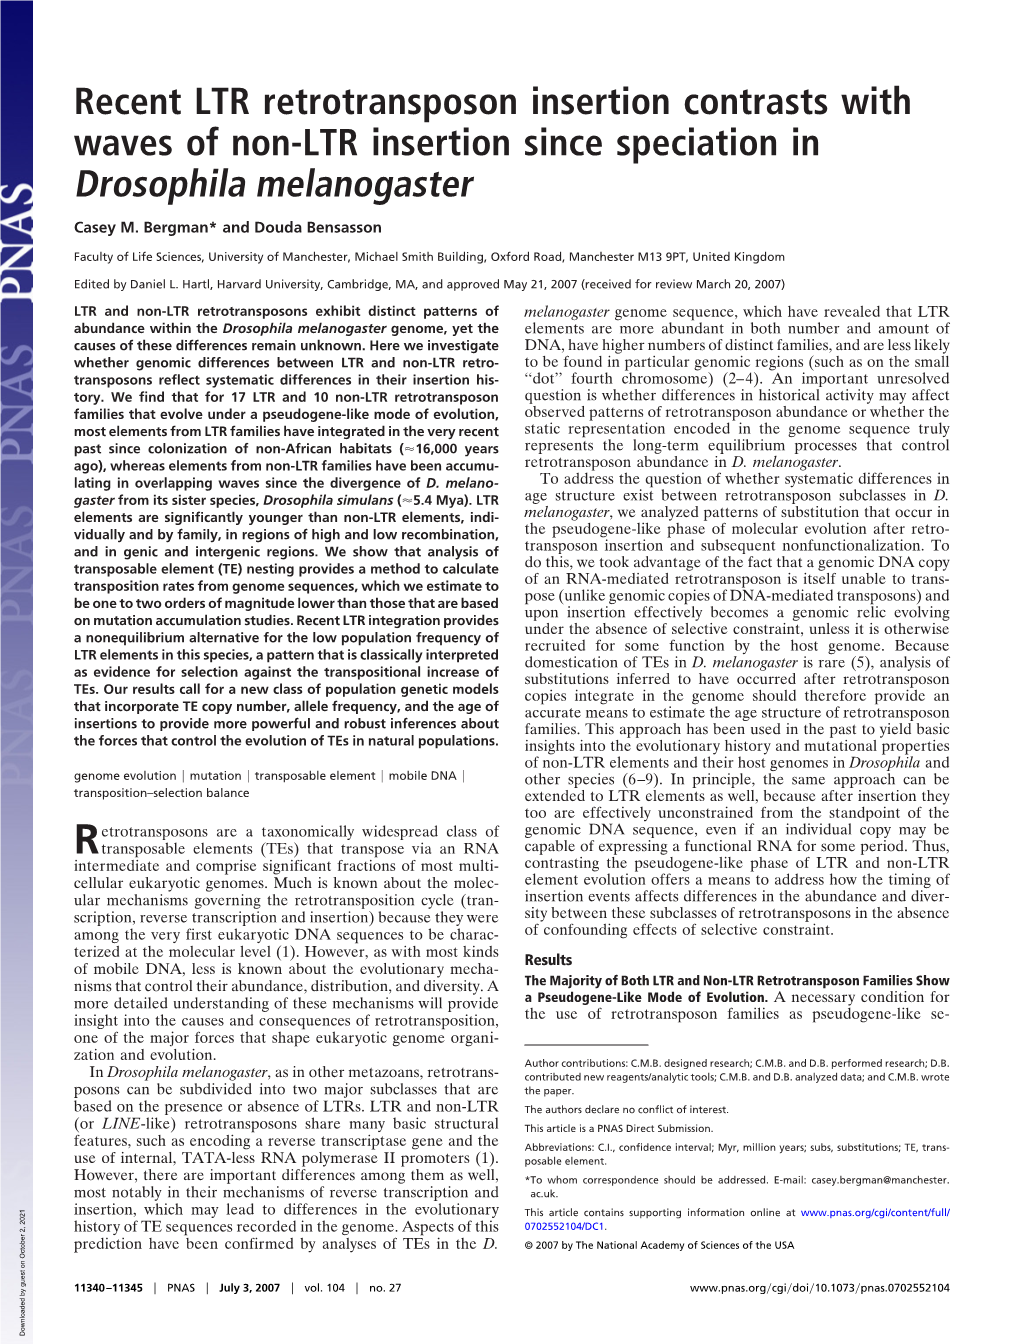 Recent LTR Retrotransposon Insertion Contrasts with Waves of Non-LTR Insertion Since Speciation in Drosophila Melanogaster